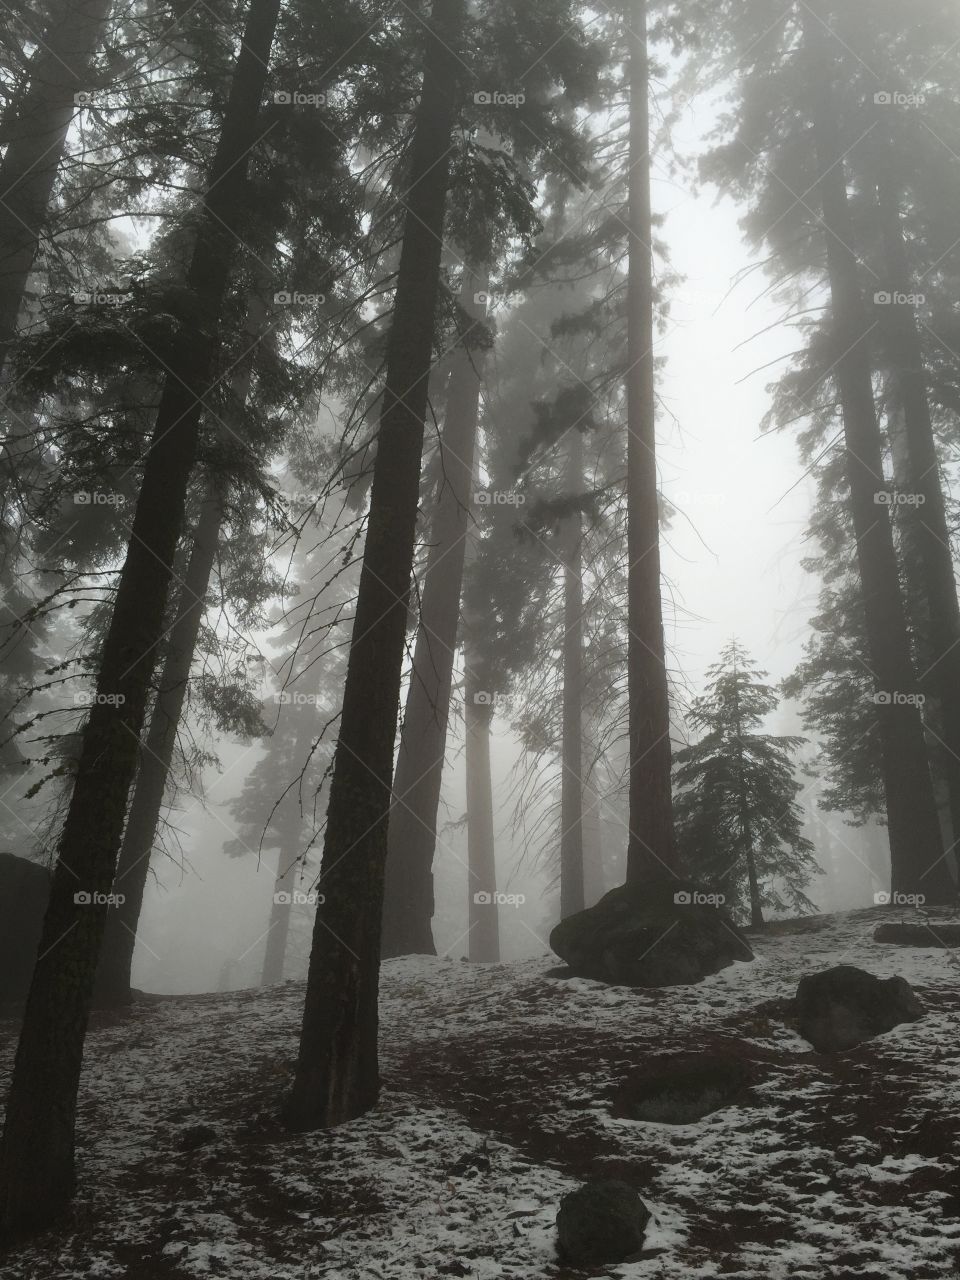 Giants in the Mist